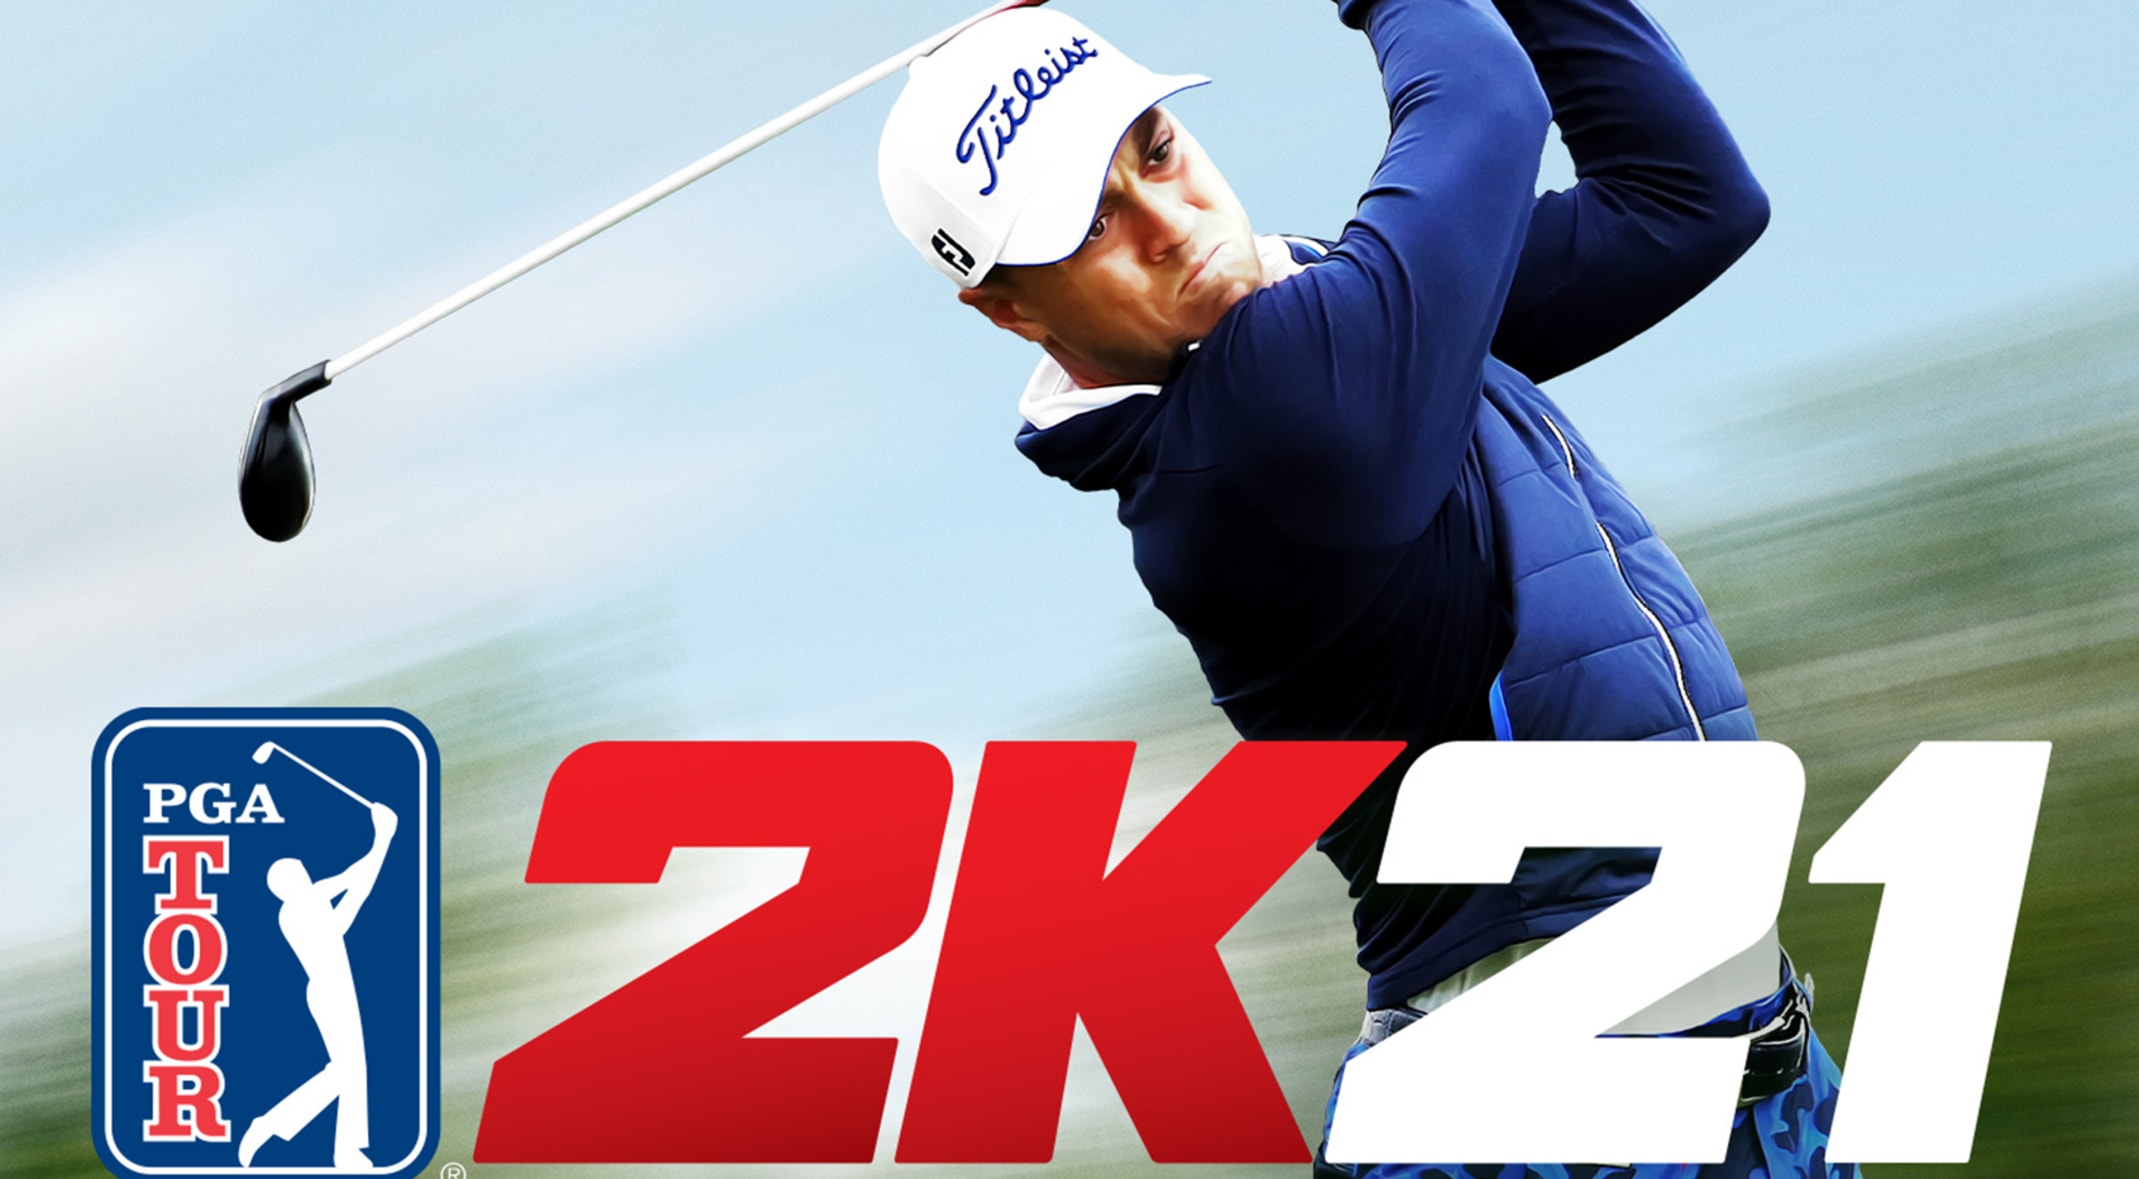 EA SPORTS™ PGA TOUR™ Ру for mac download free